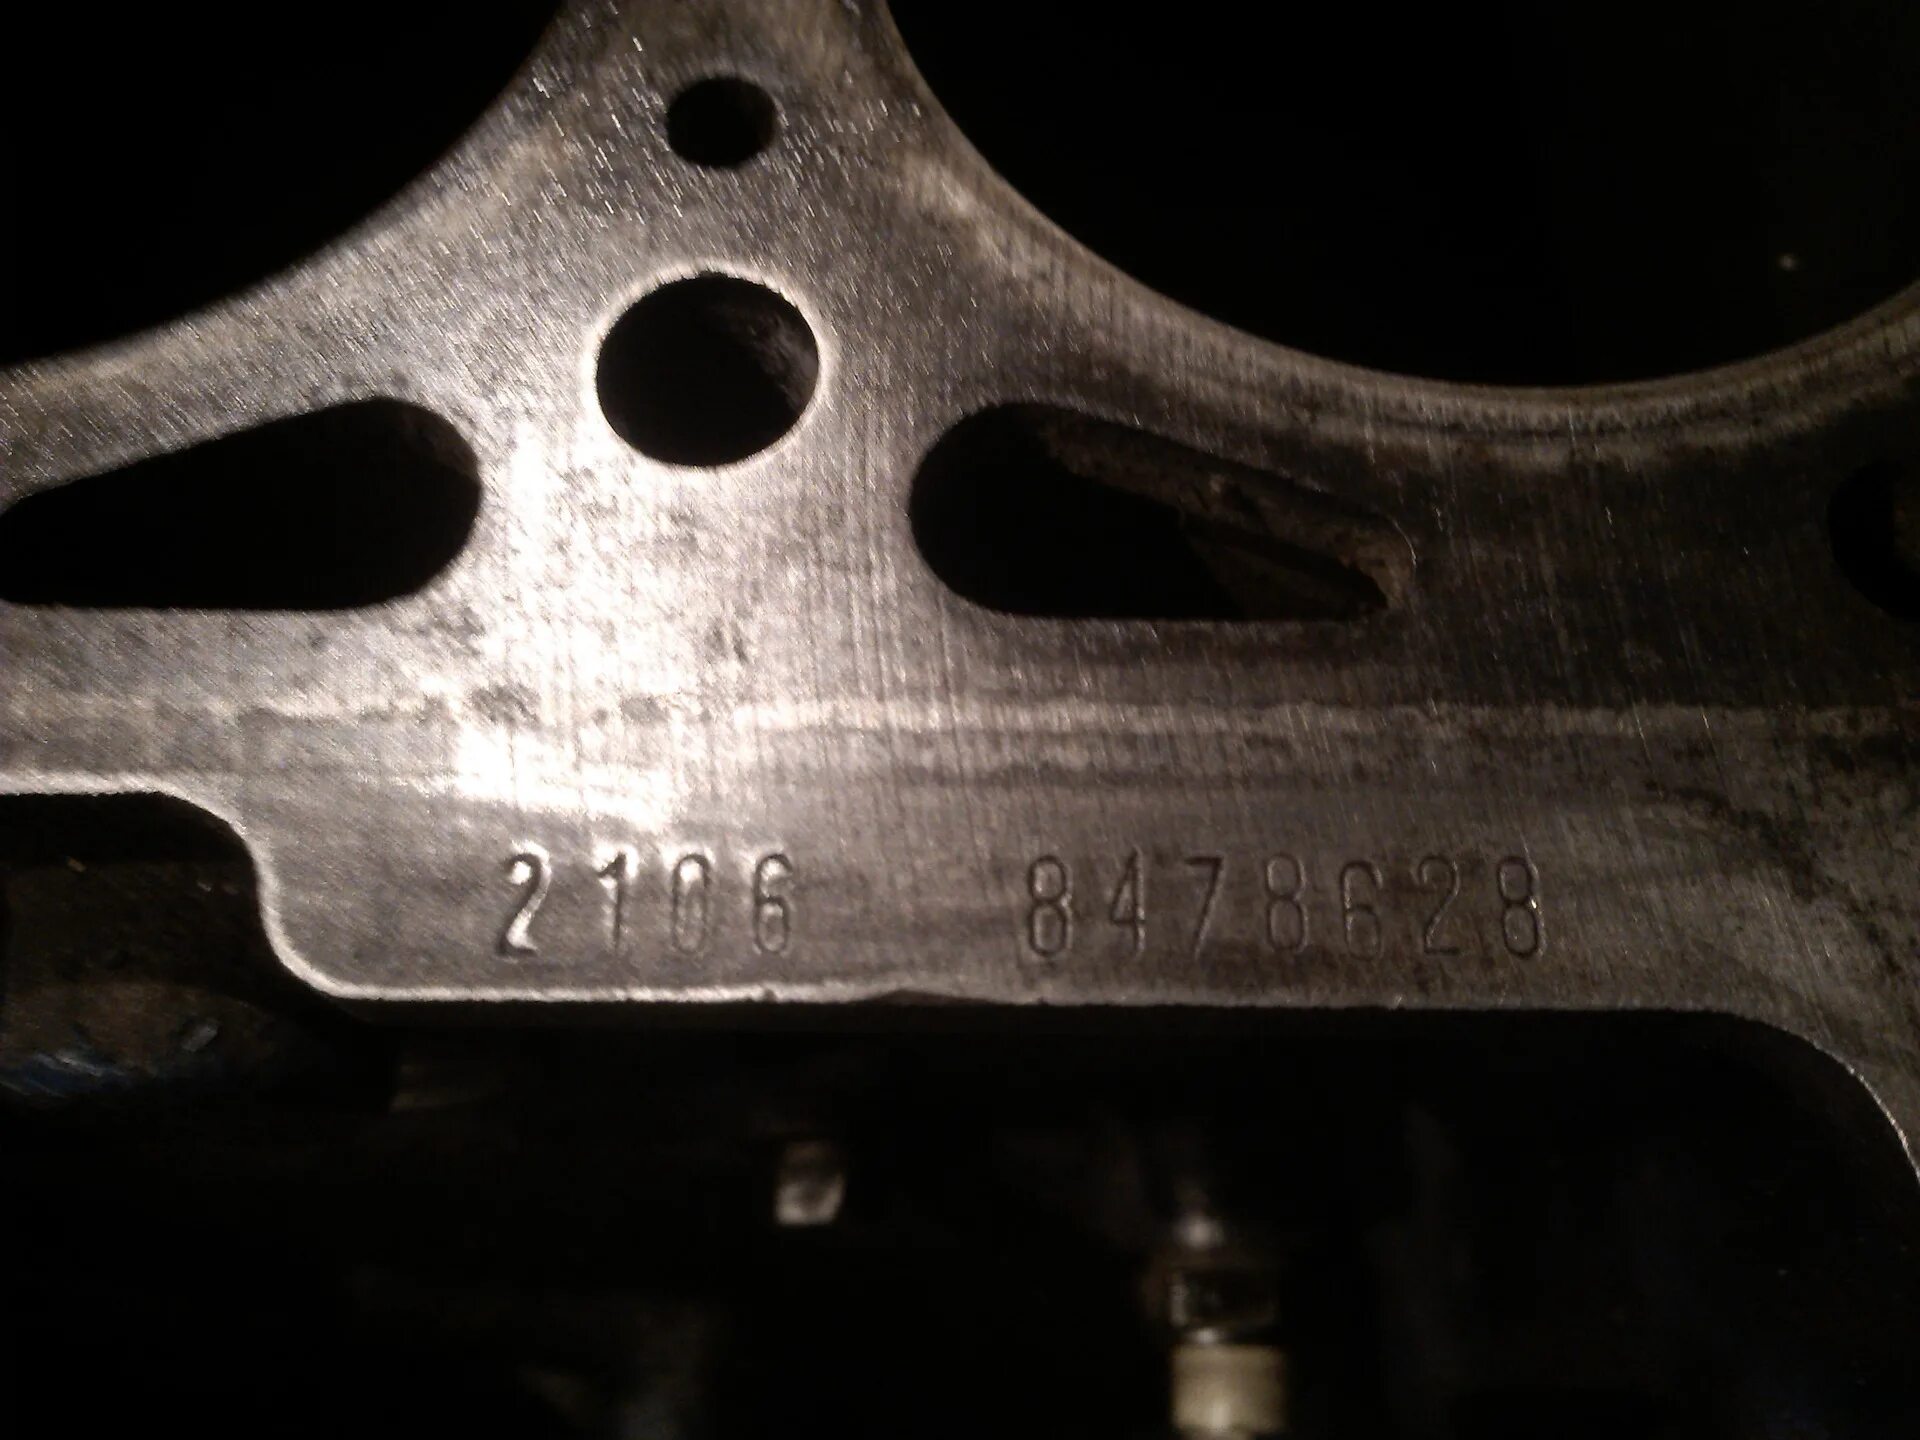 Номер двигателя 2103. Номер ДВС 2106. Номер двигателя на блоке 2103. ВАЗ 2103 номера номер двигателя.